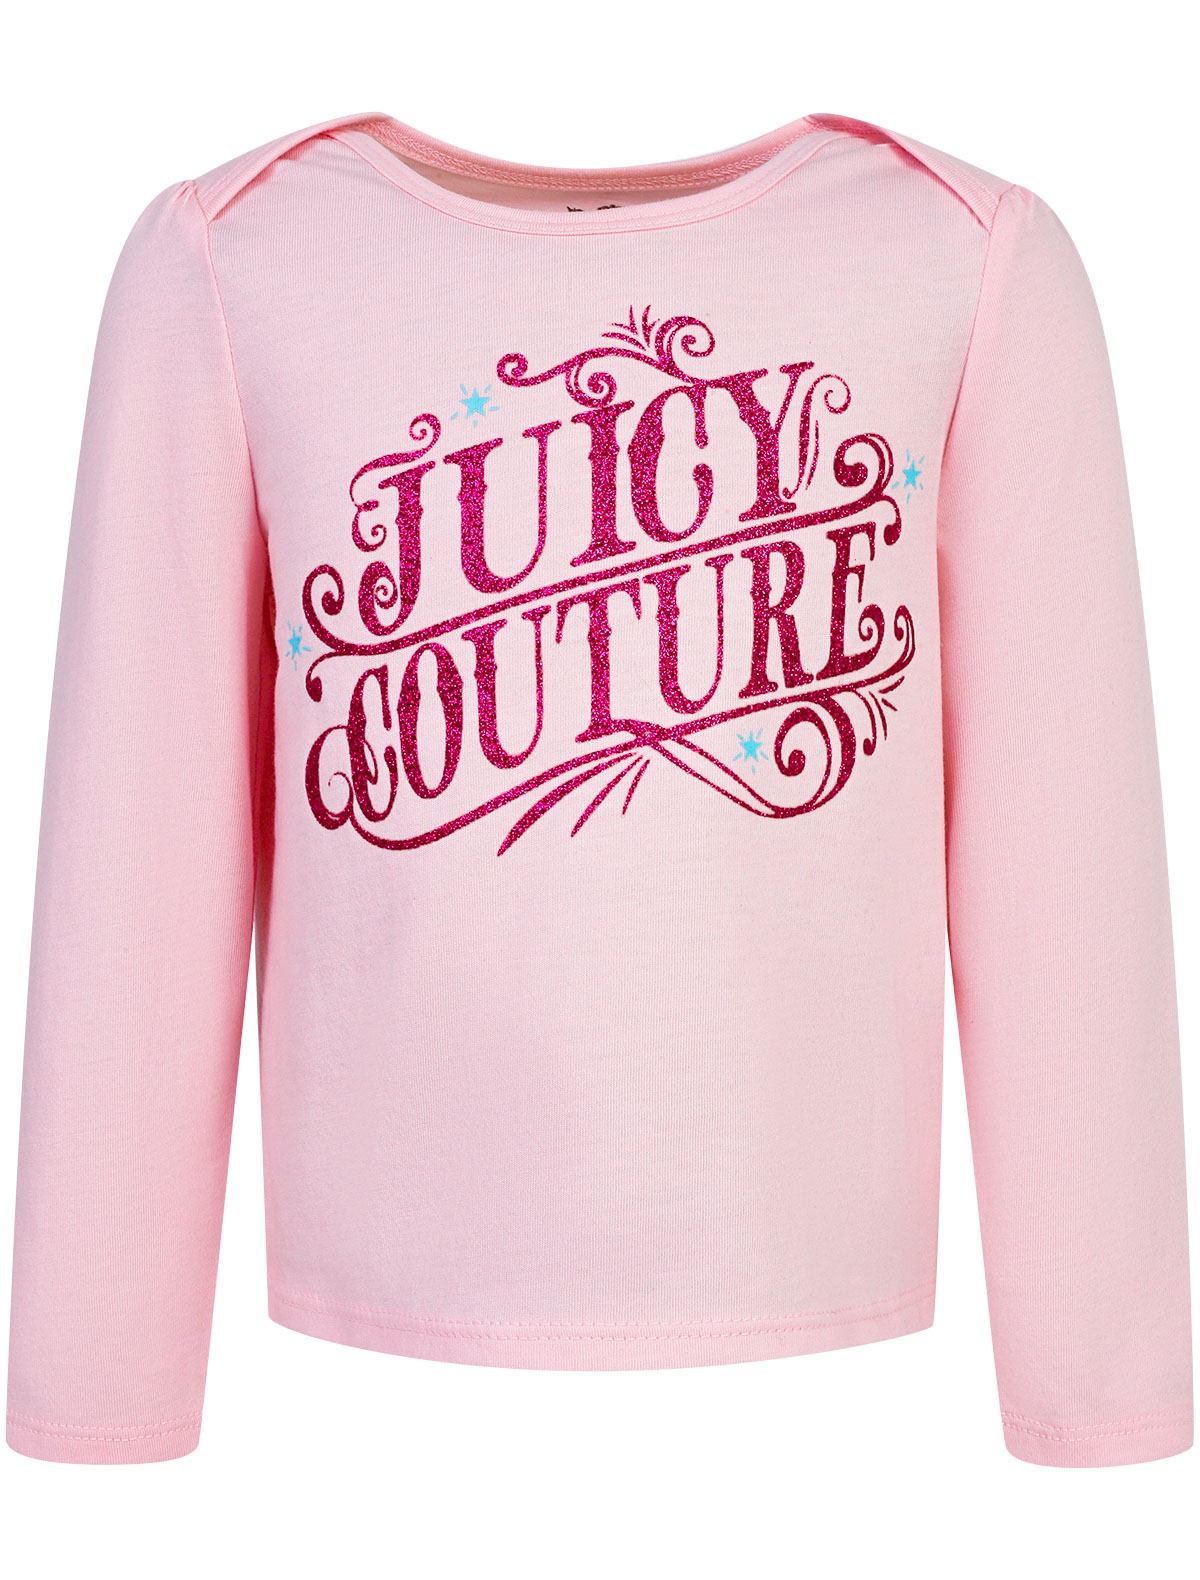 Лонгслив Juicy Couture розового цвета